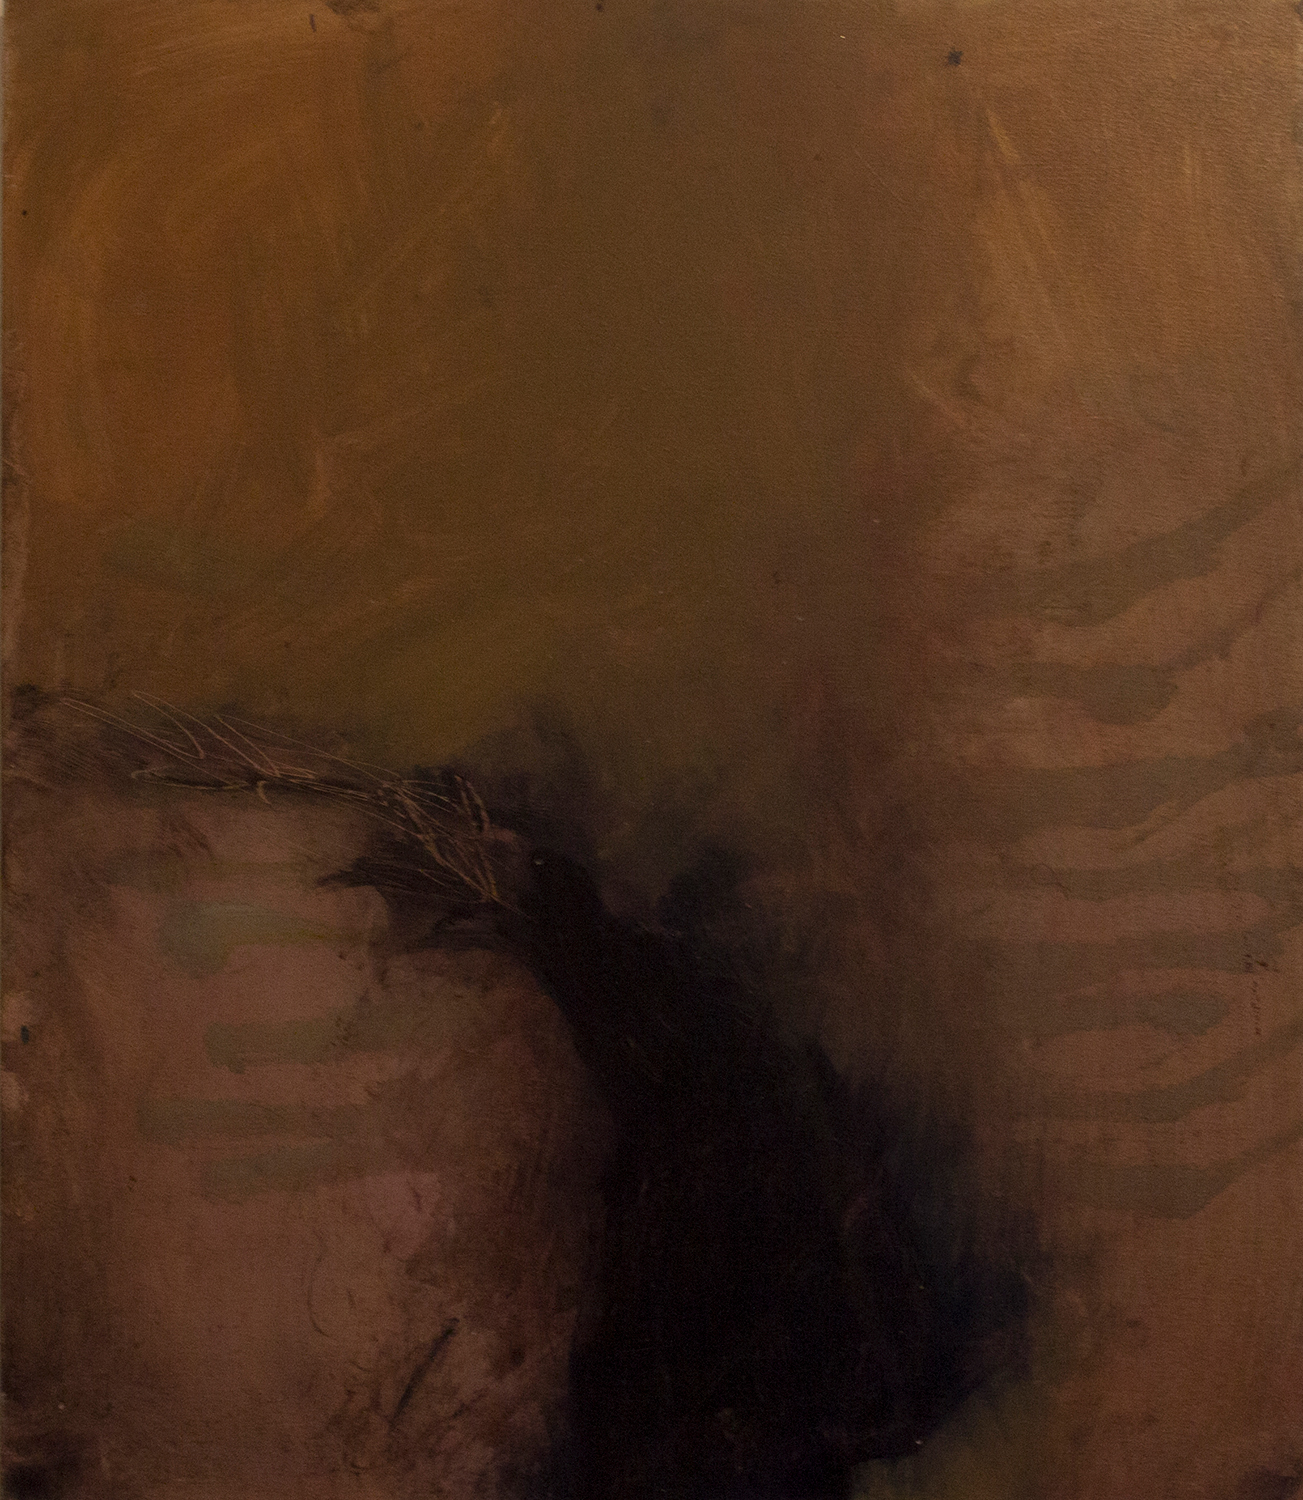 Jules Allan - A vestige 1, 70cm x 60cm, oil on canvas